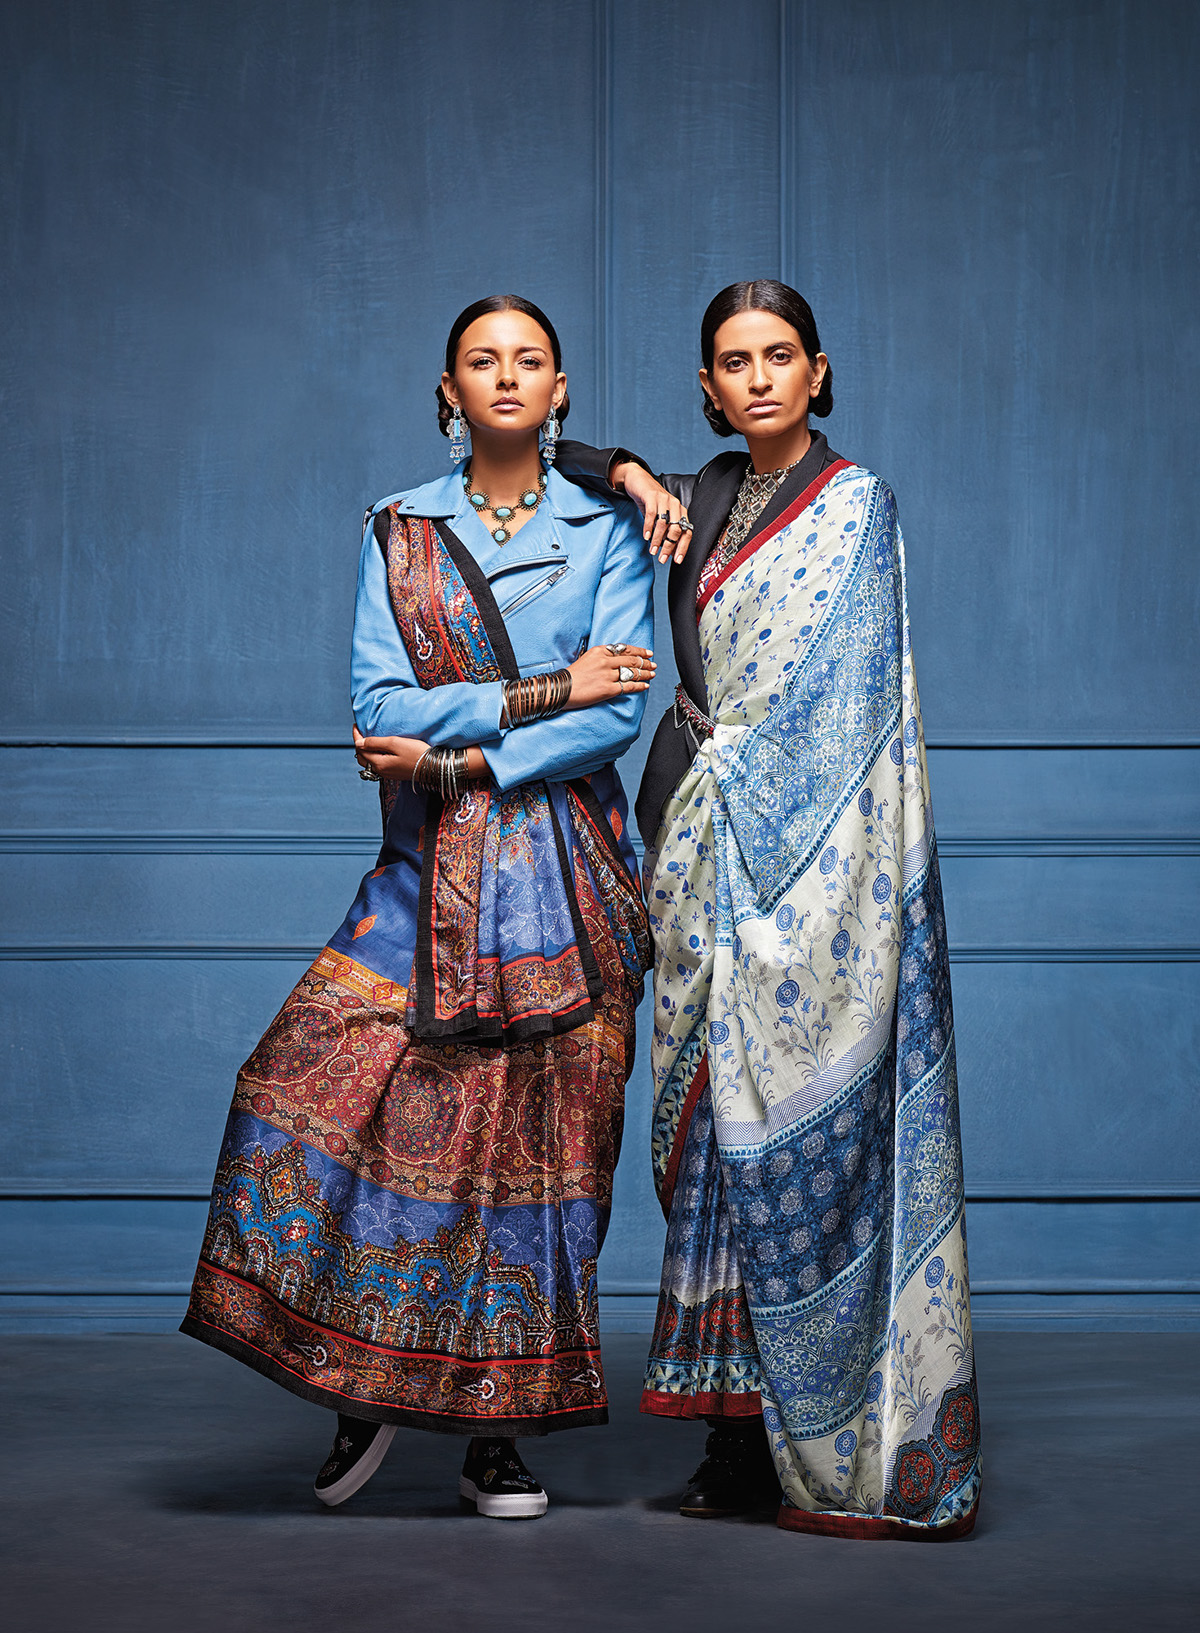 India modern  Liva Sarees liva Sumeet ballal photography campaignshoot fashionphotographyindia Indianfashion indianfashionphotography MUMBAIFASHIONPHOTOGRAPHER